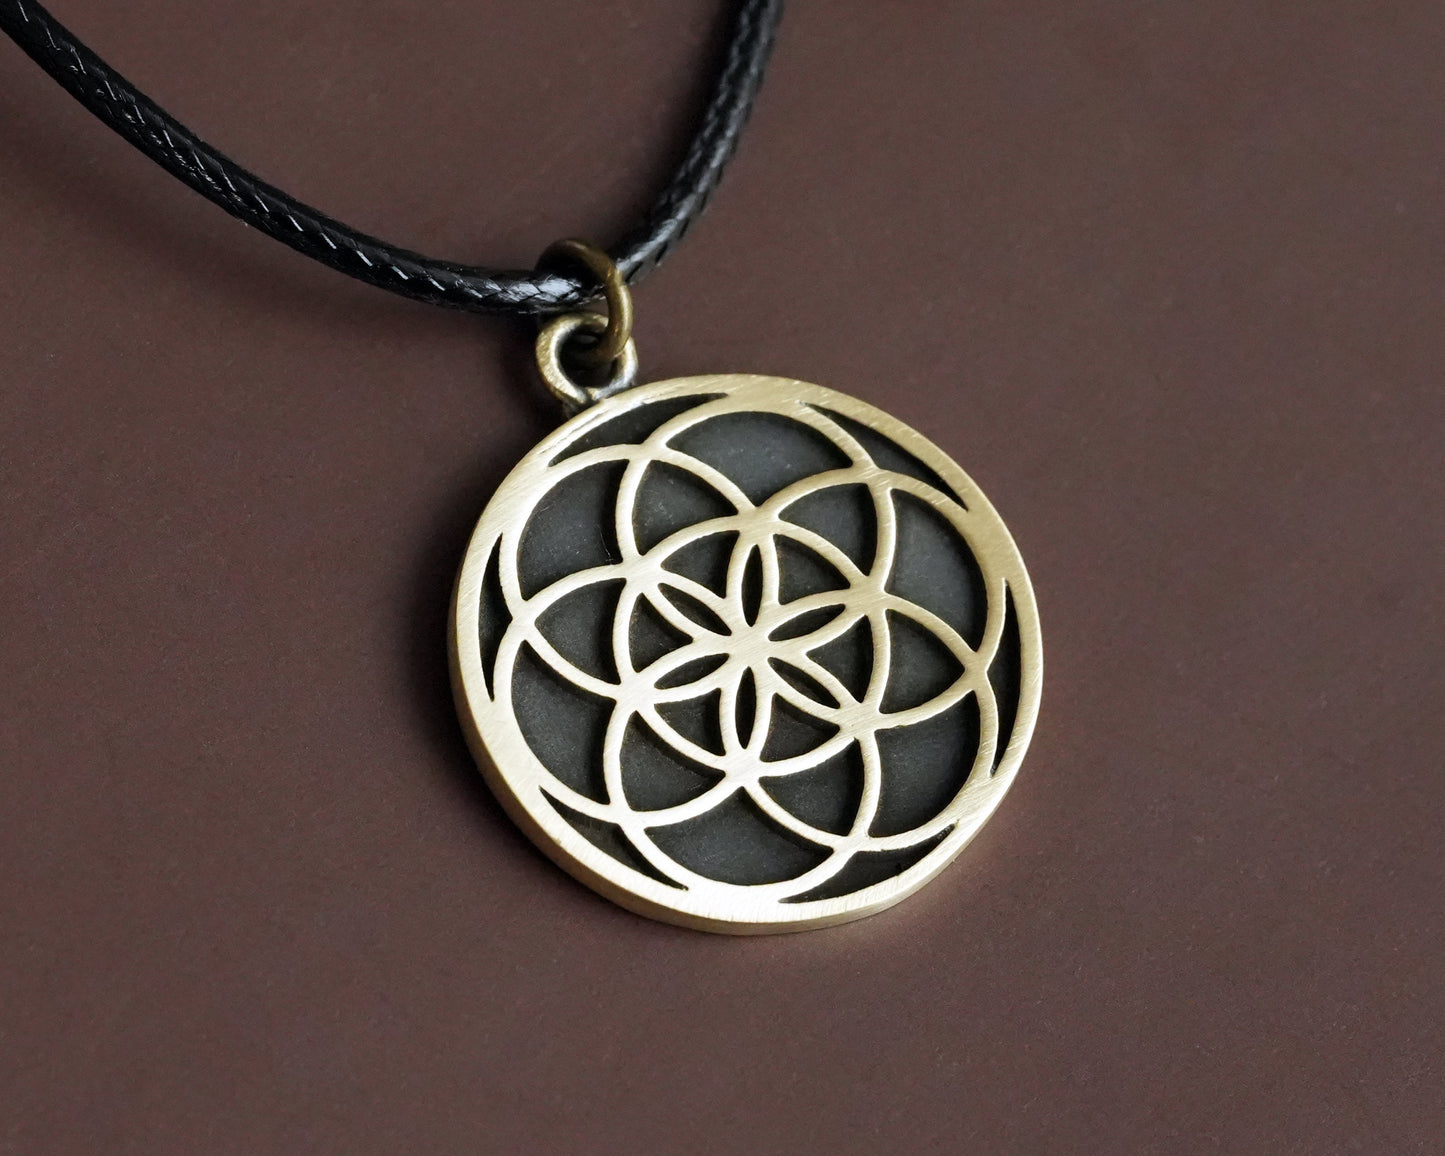 Handmade 925 Sterling Silver Seed of Life Mandala Jewelry Pendant Circle of Life Charm Sacred Geometry Necklace Yoga Protection Charm - Baldur Jewelry